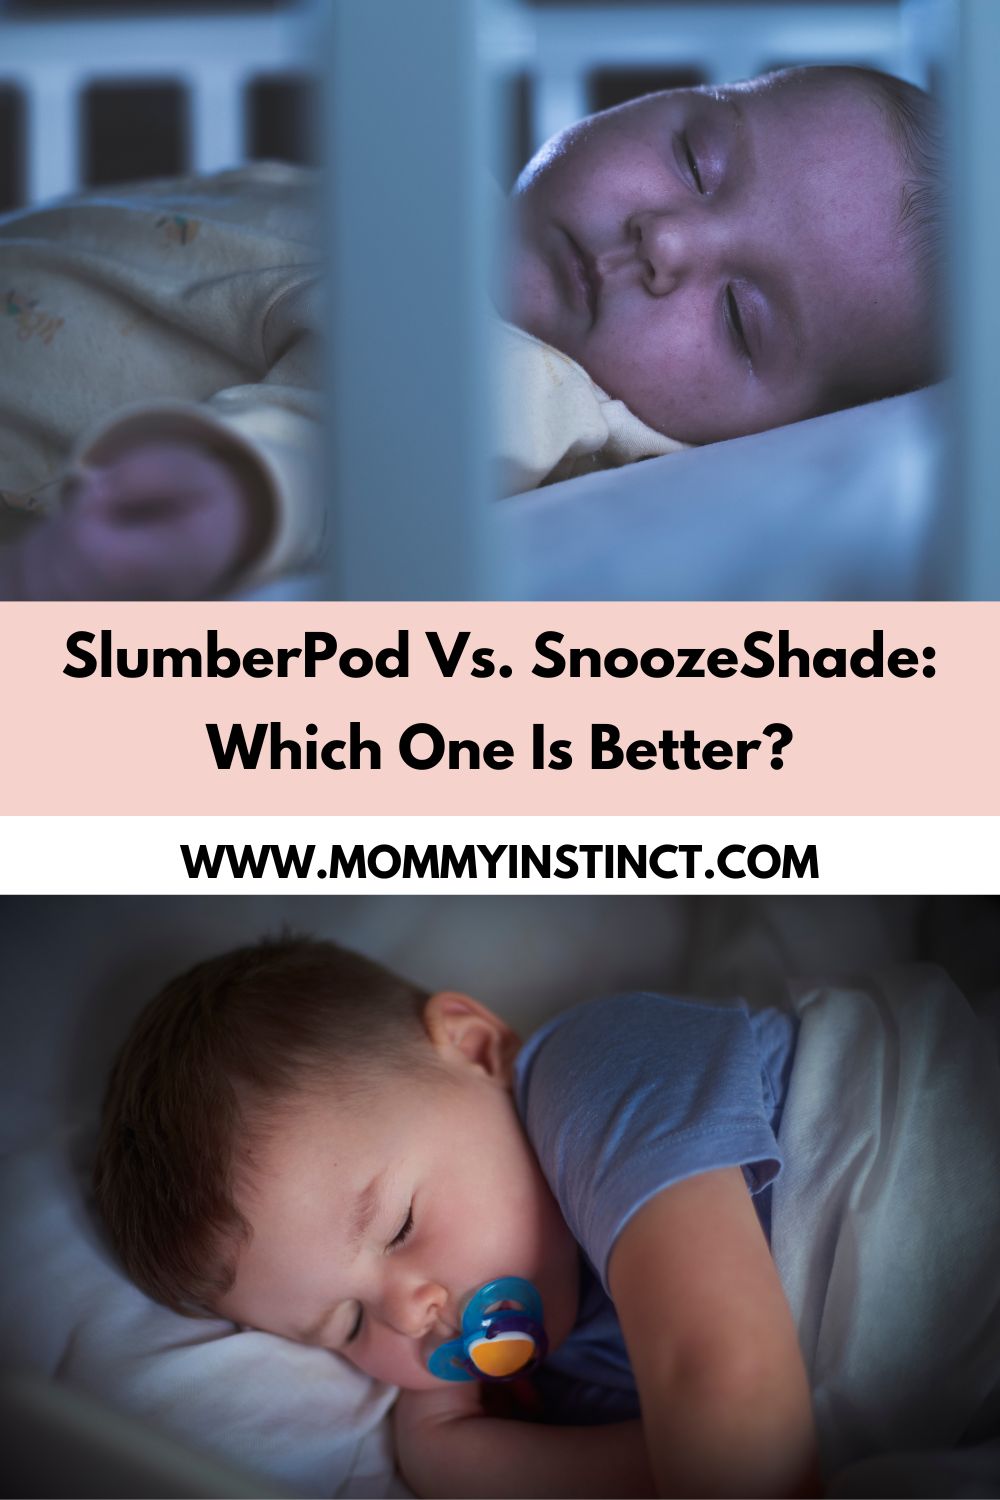 Slumberpod vs. Snoozeshade